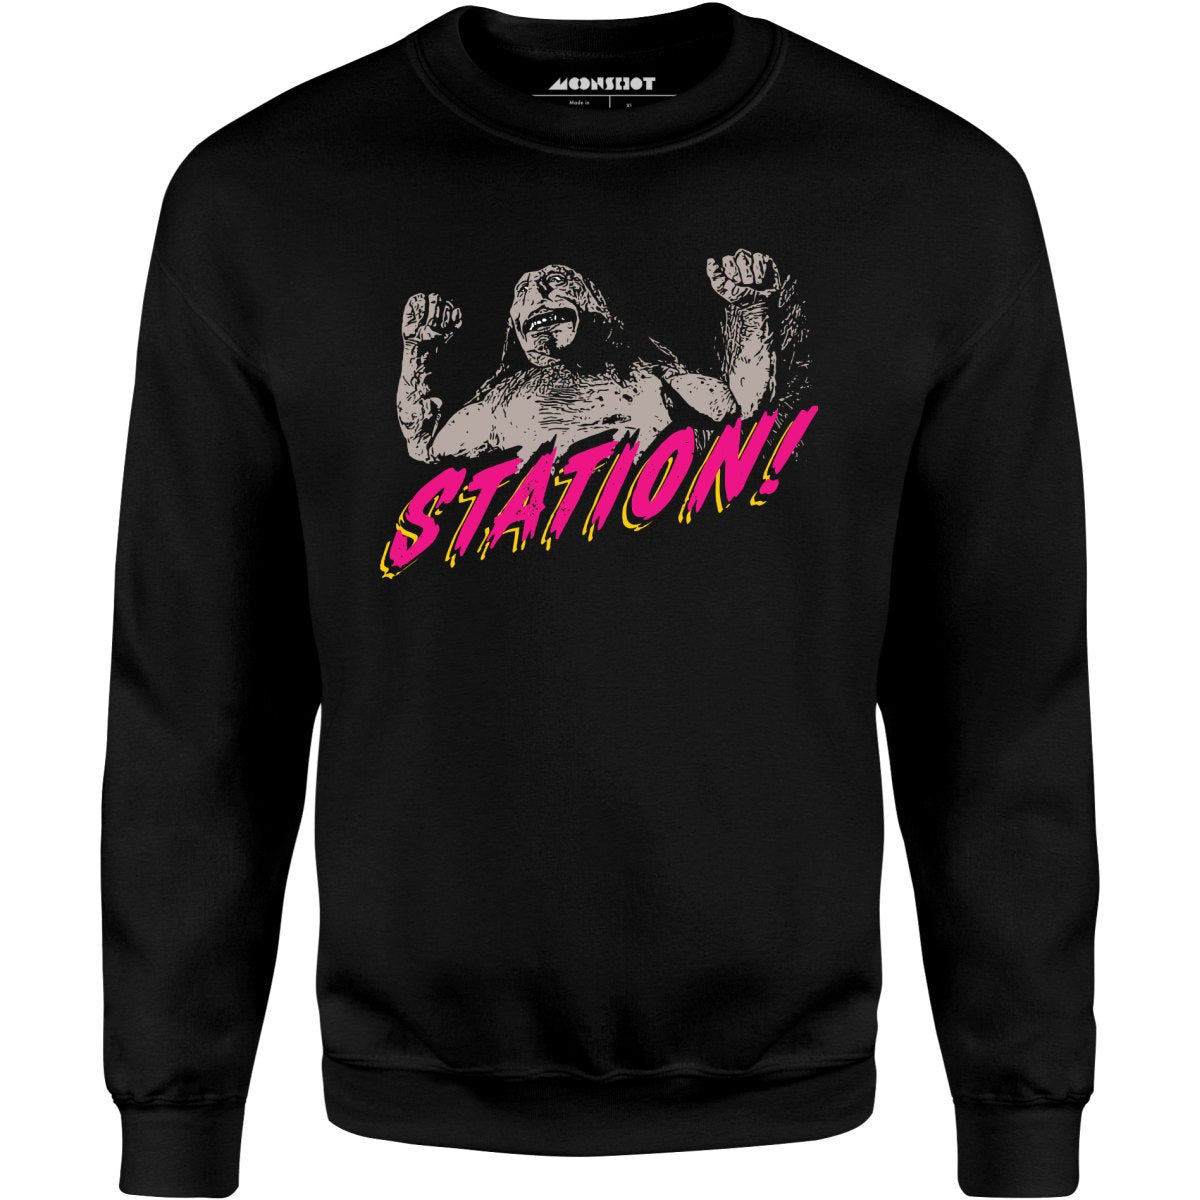 Station - Bill & Ted - Unisex Sweatshirt